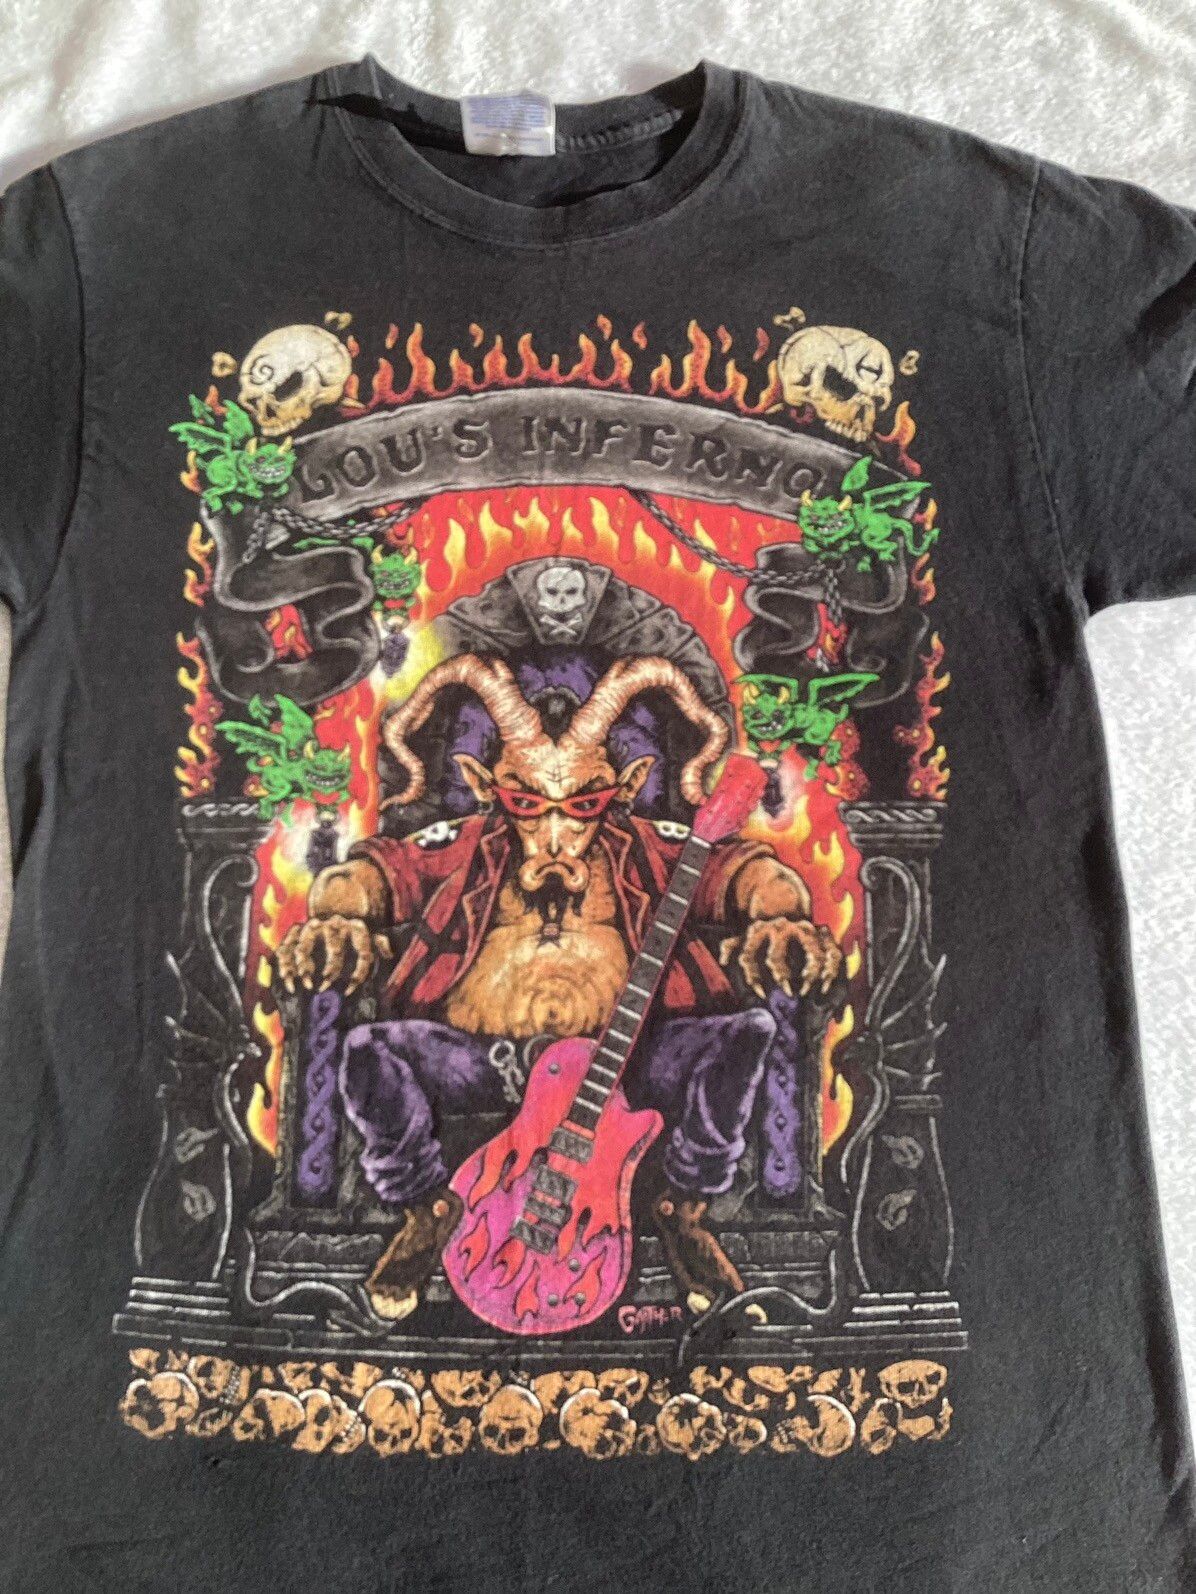 Vintage Vtg 2007 guitar hero 3 legends of rock blues Inferno shirt Size US S / EU 44-46 / 1 - 2 Preview